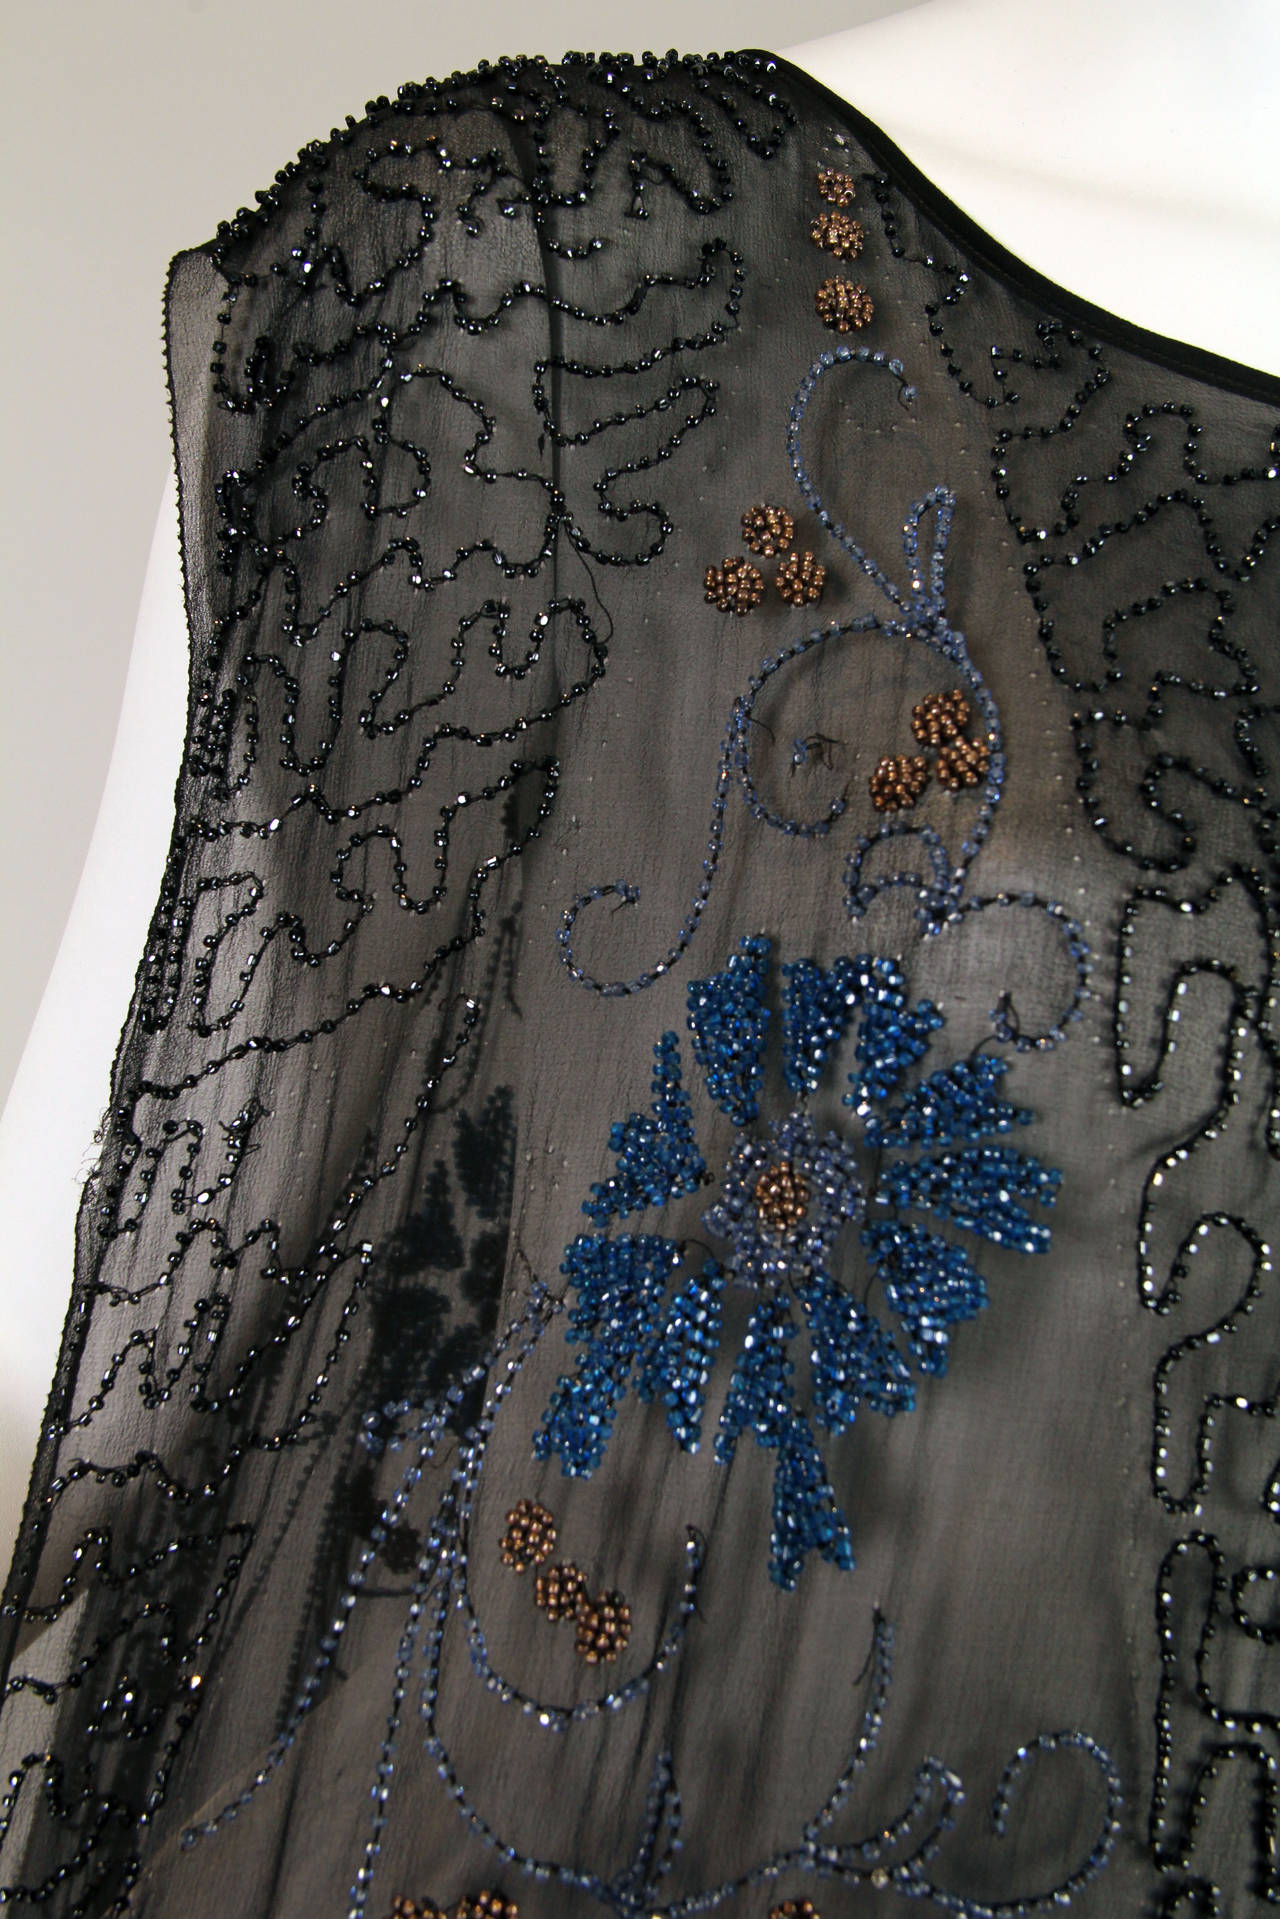 Early Art Deco Era Beaded Silk Tabard For Sale at 1stdibs